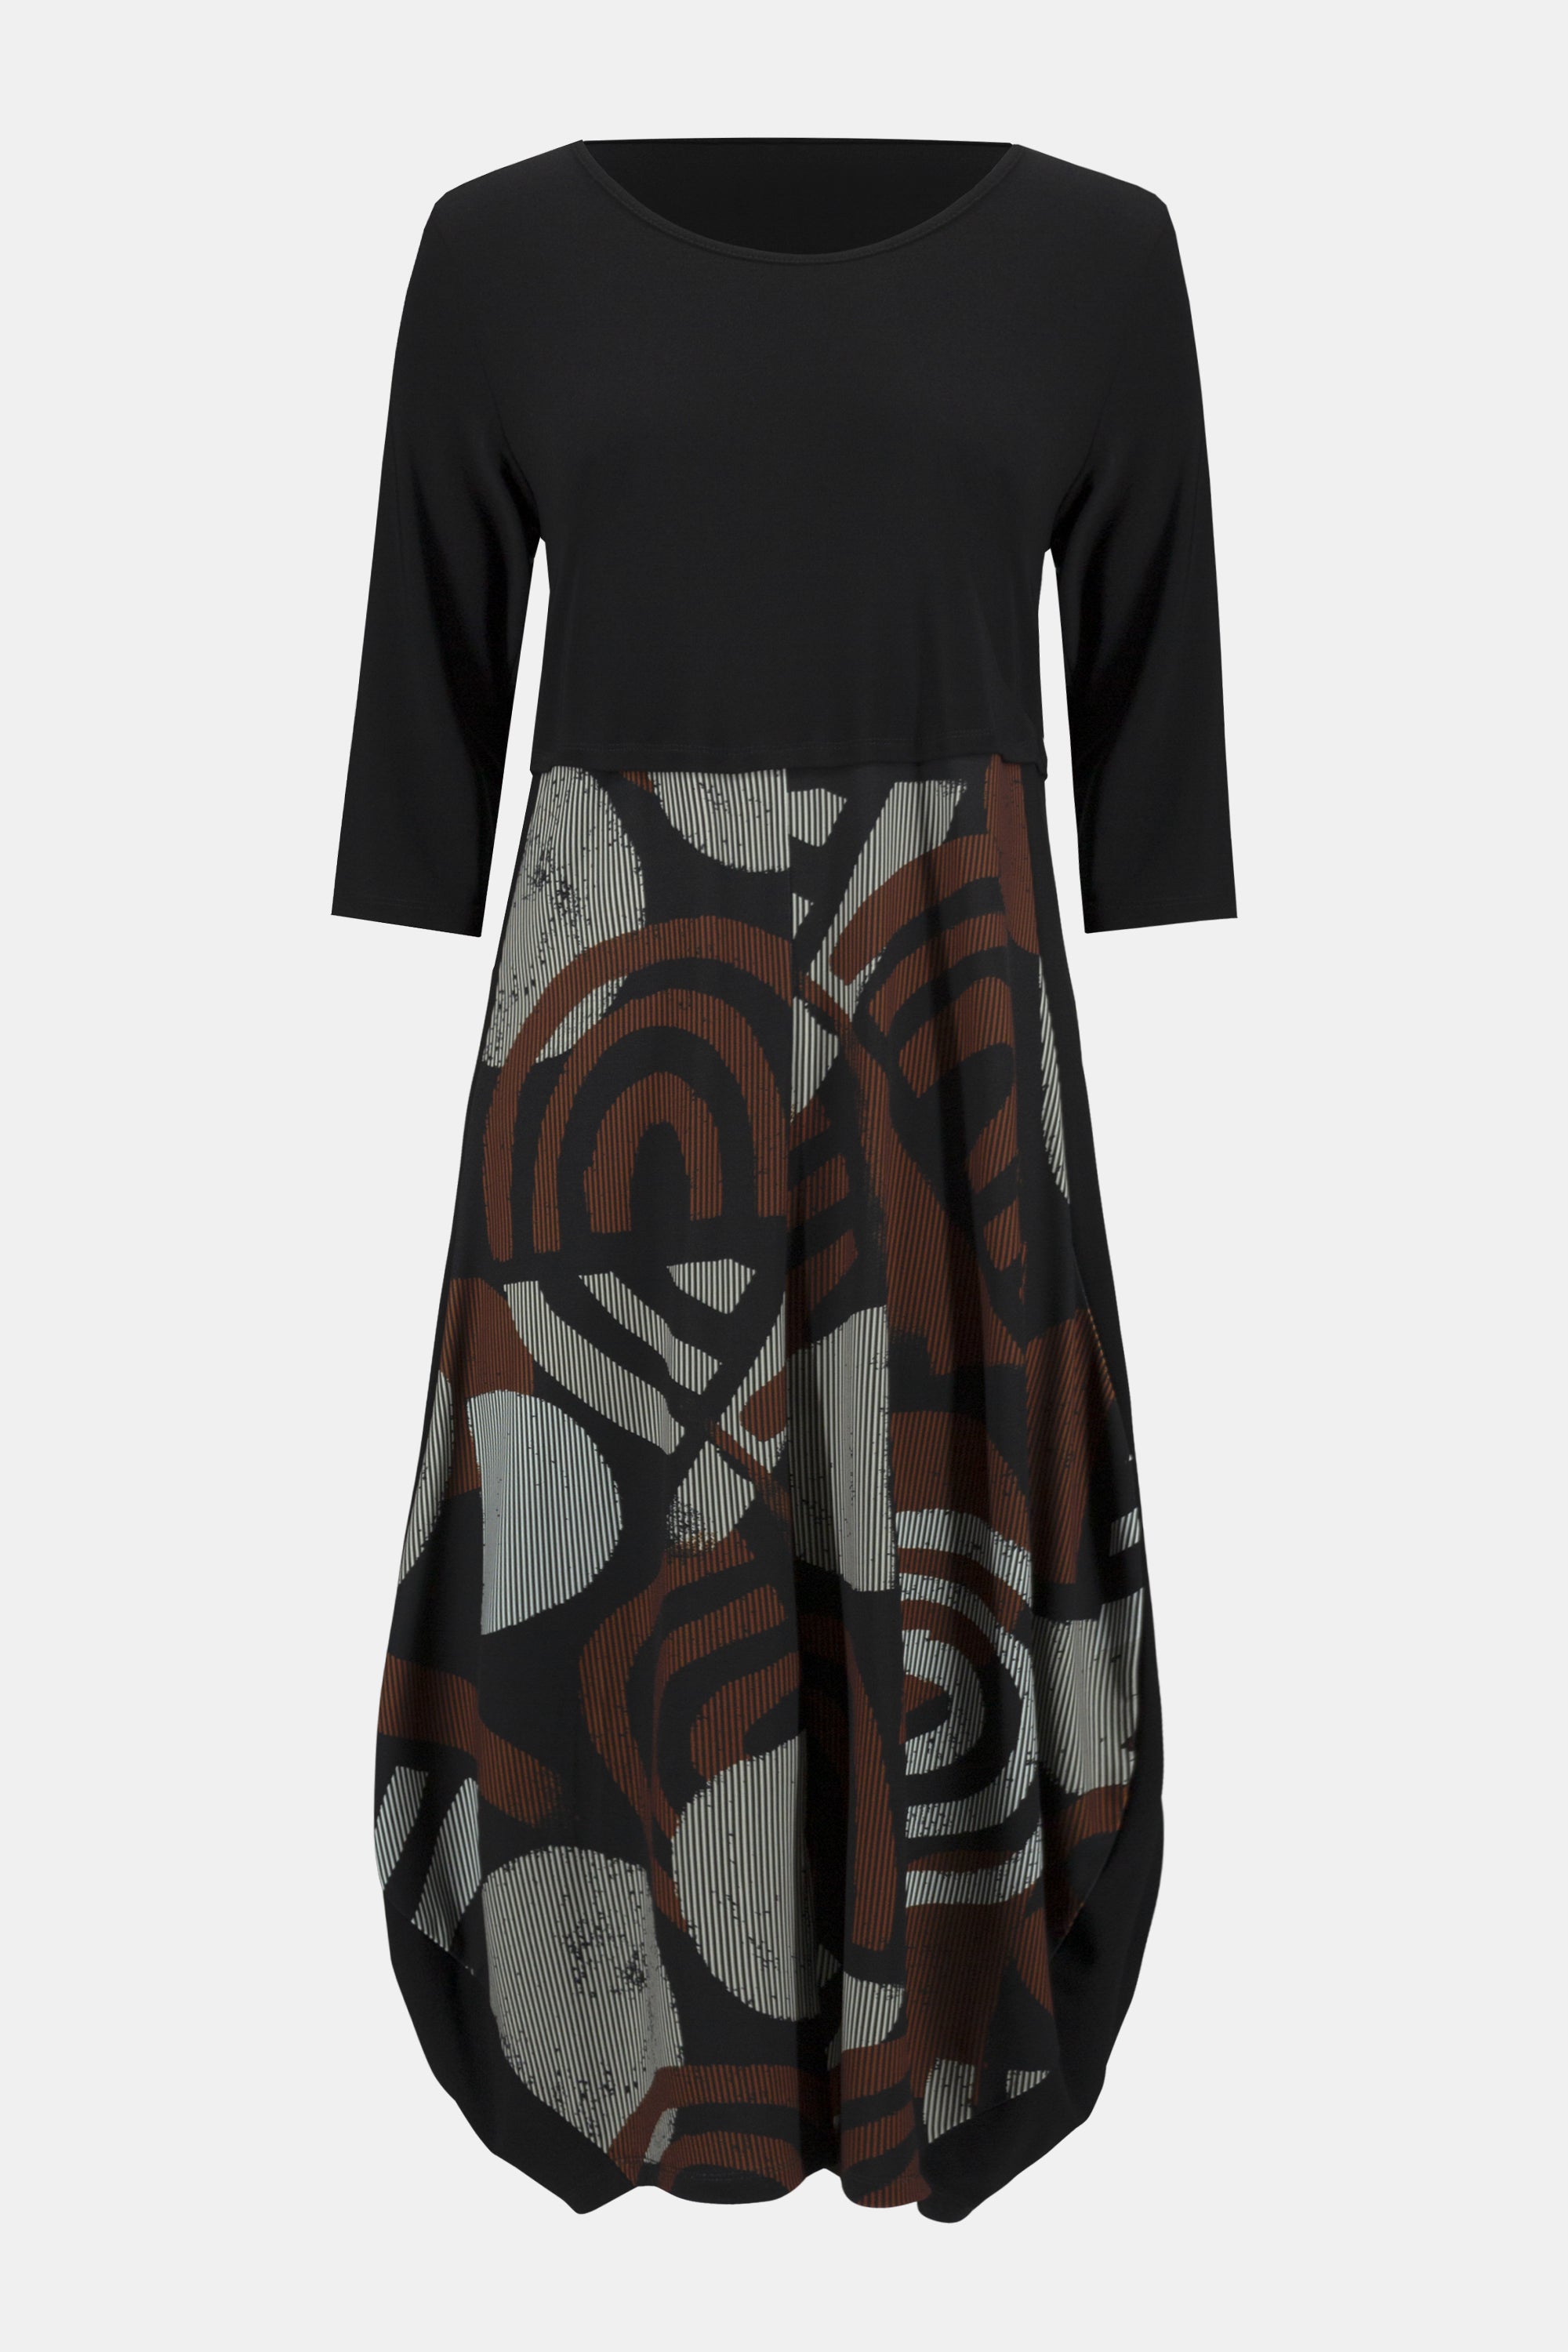 Black & Print Dress - 243234